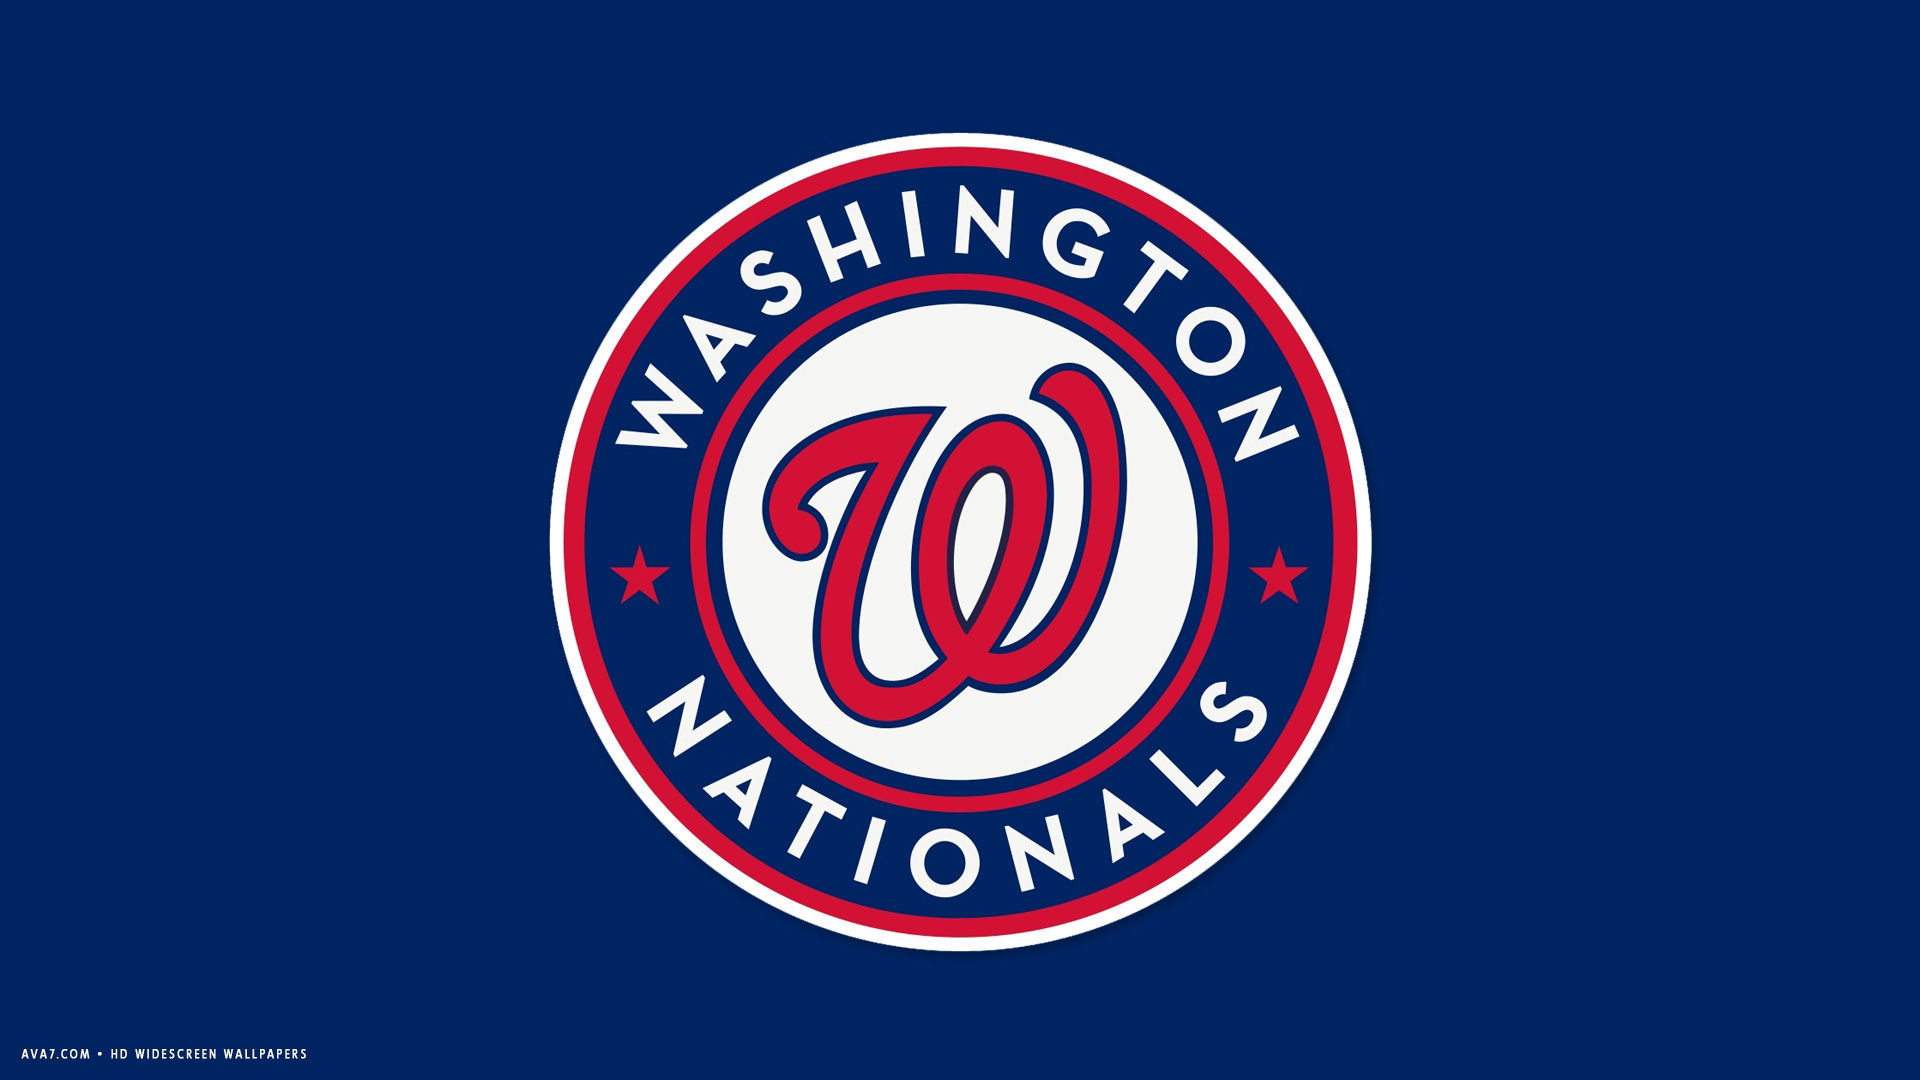 Washington Nationals Mlb Baseball Team Hd Widescreen Wallpaper 1920x1080